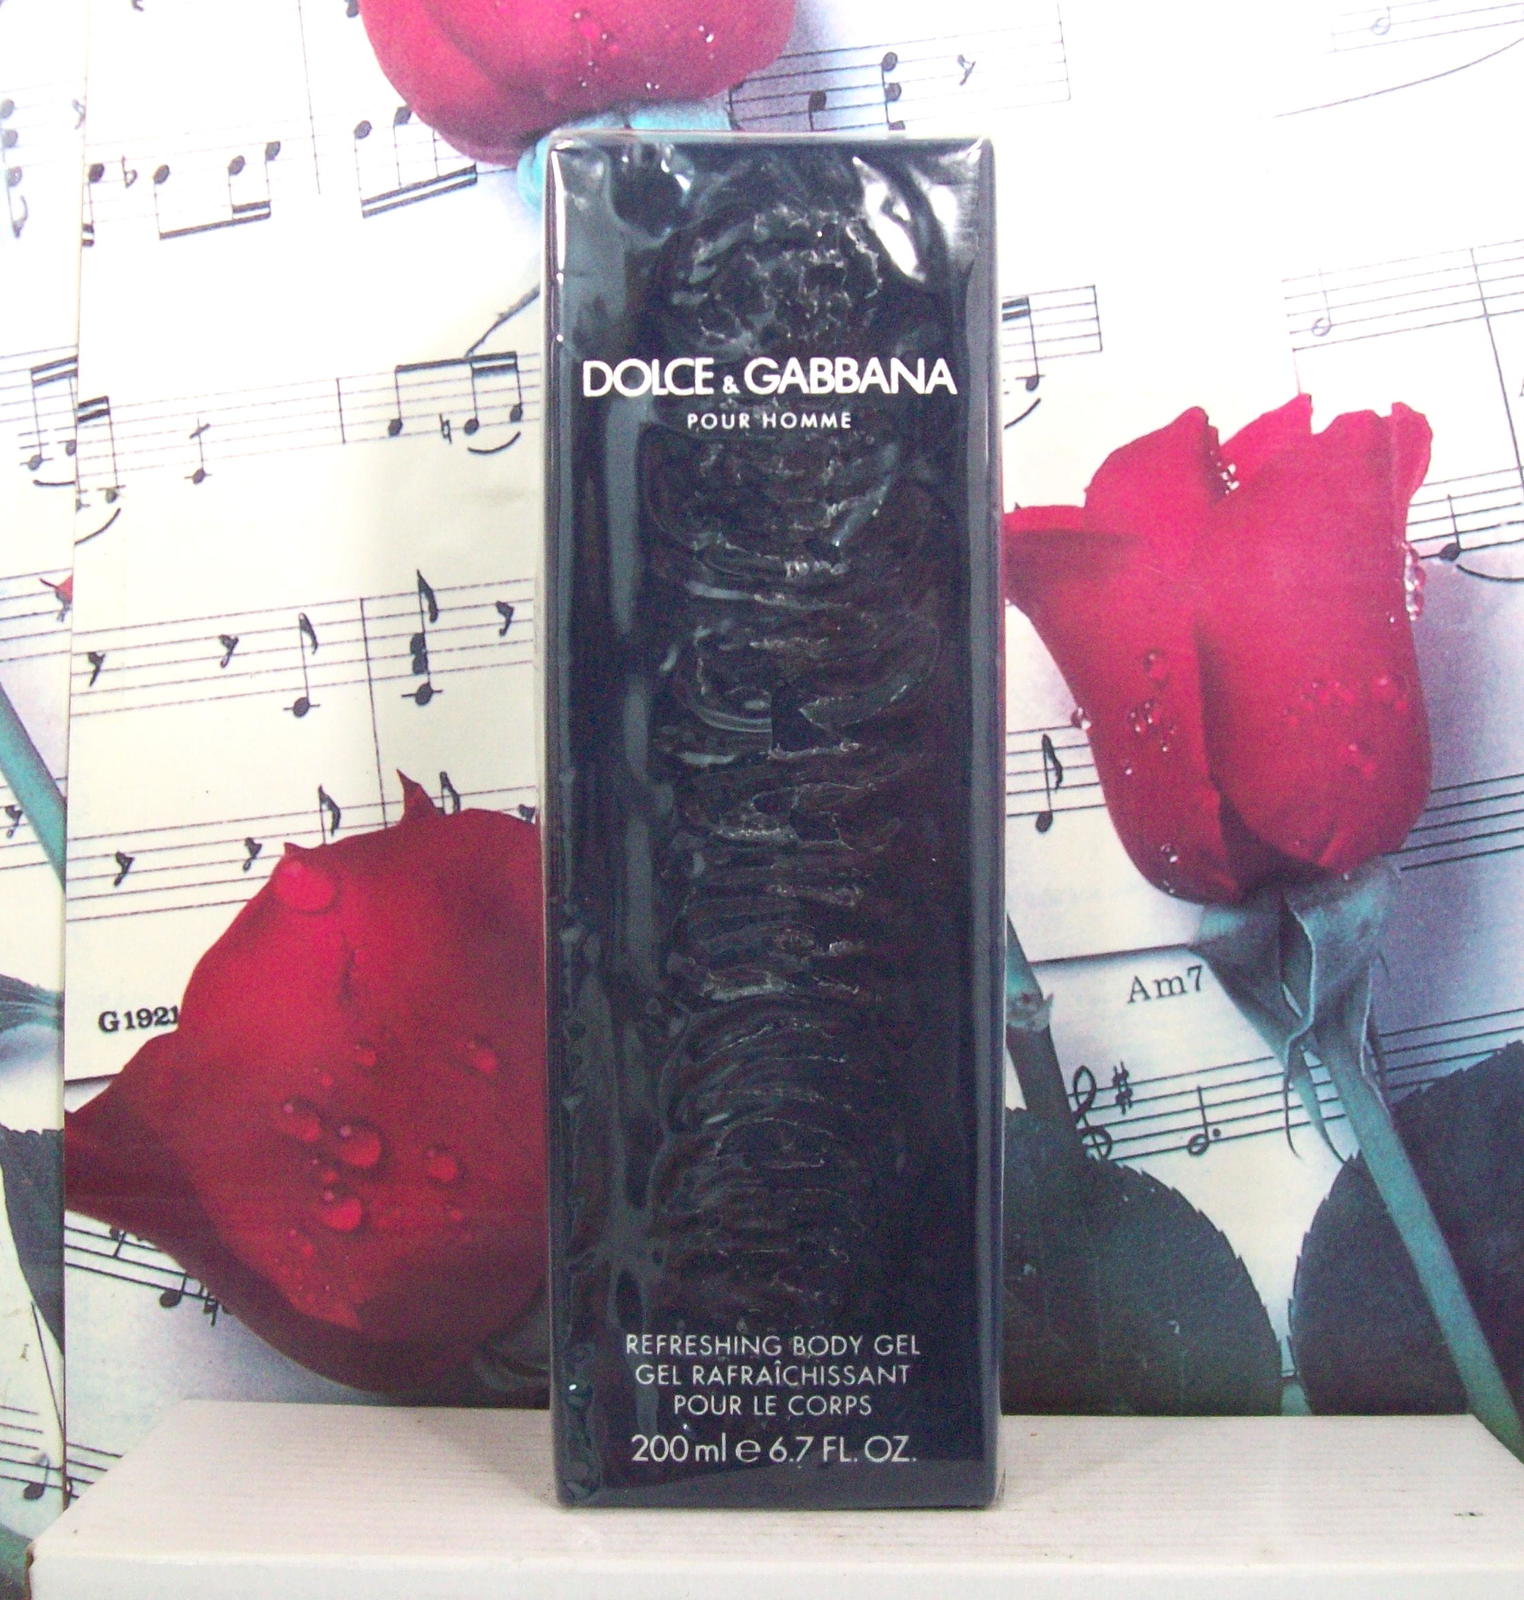 Dolce & Gabbana Pour Homme 6.7 OZ. Reefreshing Body Gel - $69.99